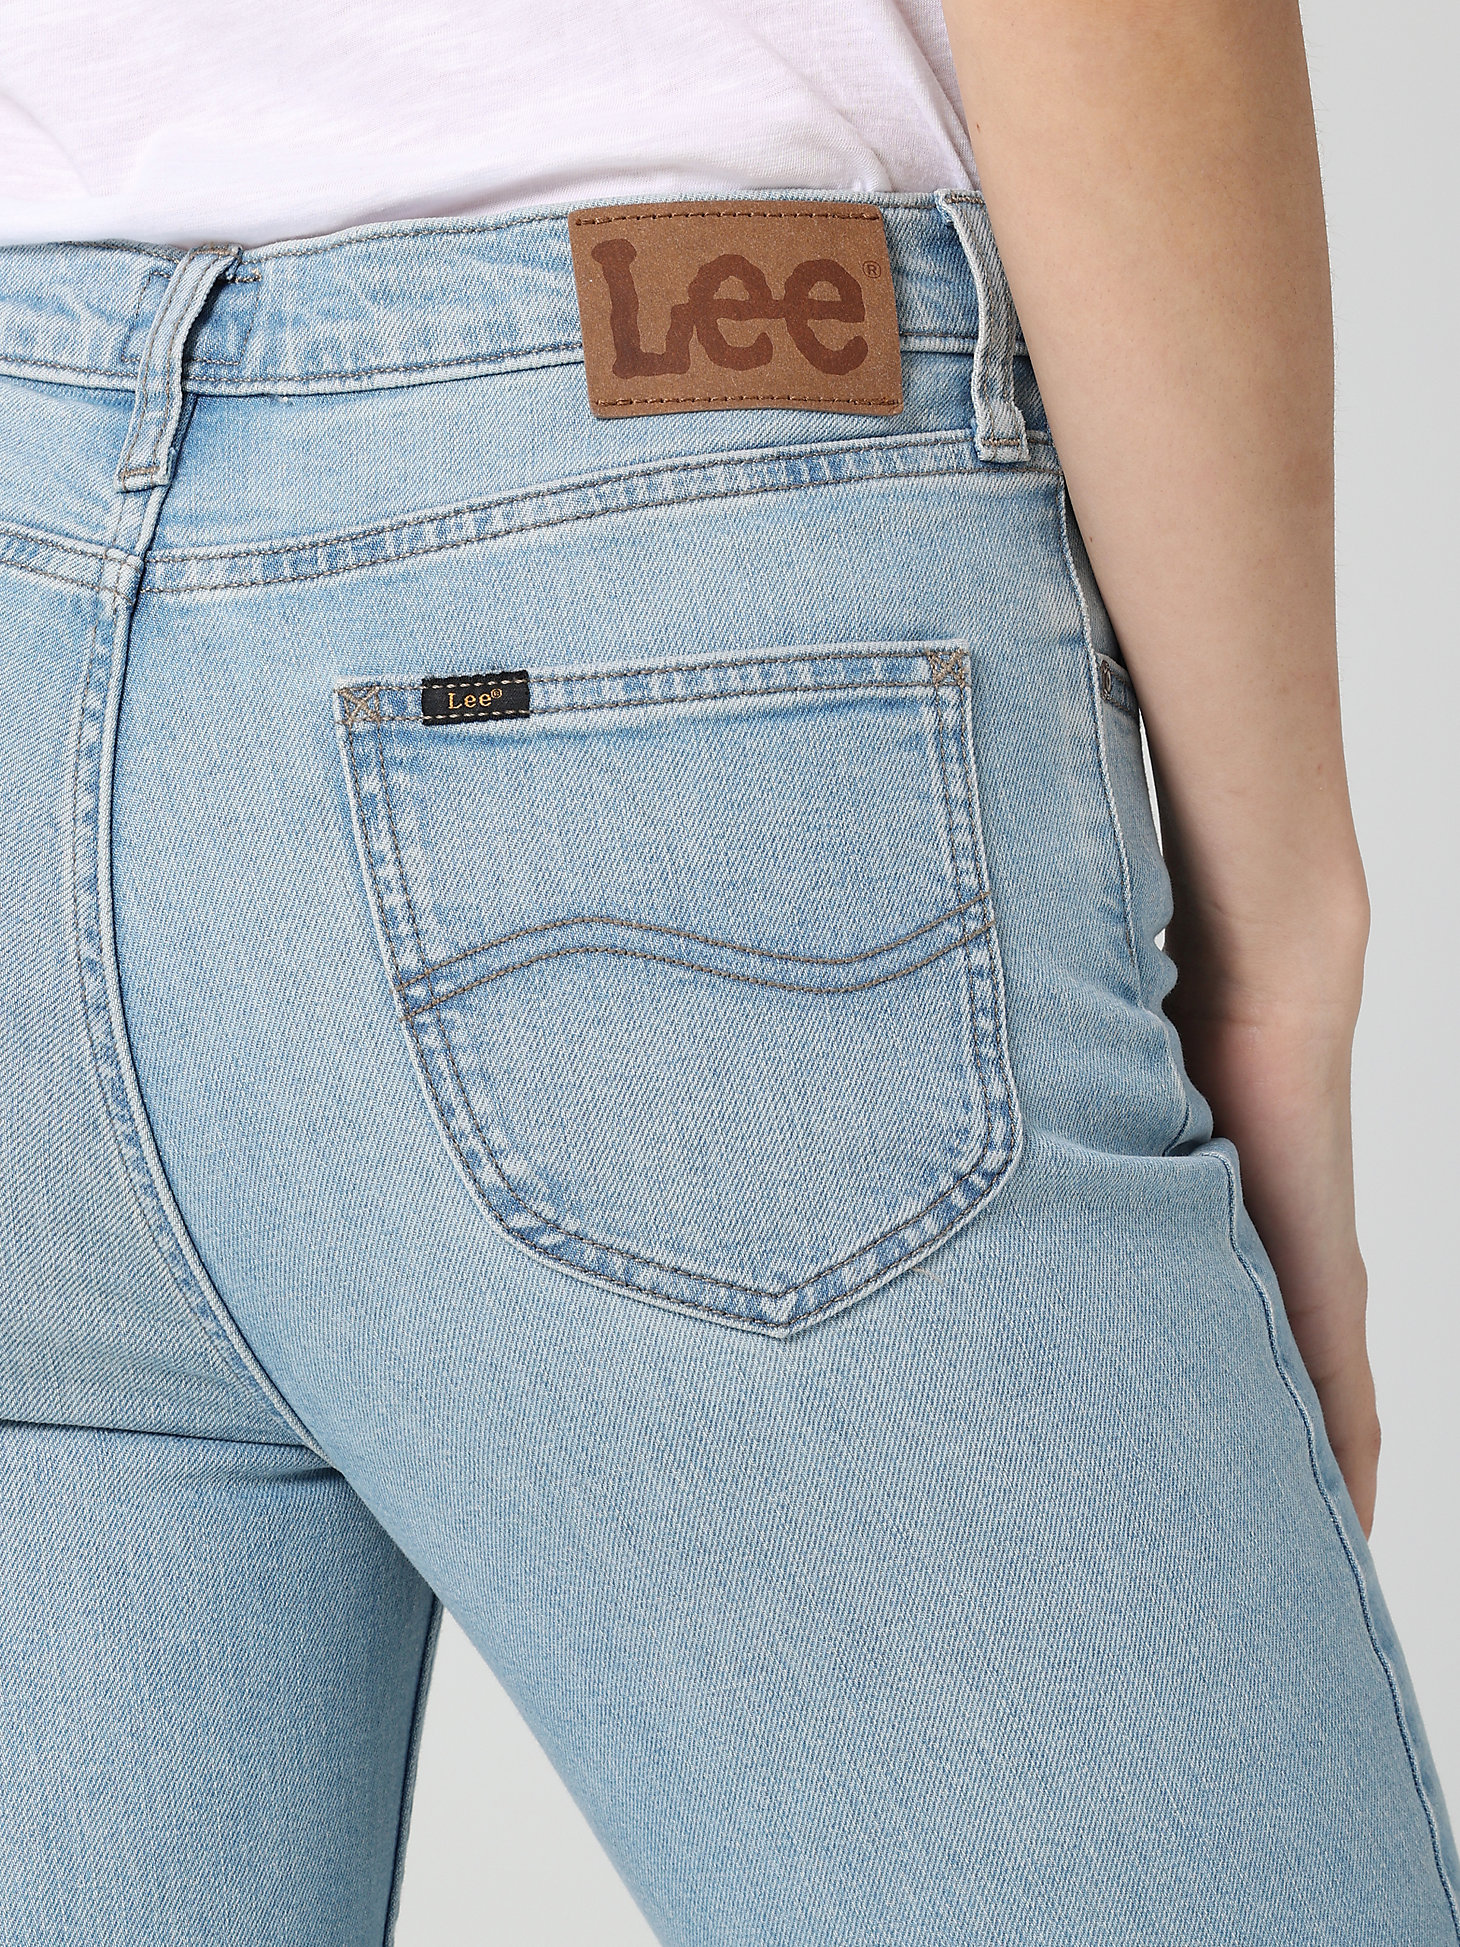 Women's Lee European Collection High Rise Split Flare Jean in Sunbleach alternative view 4